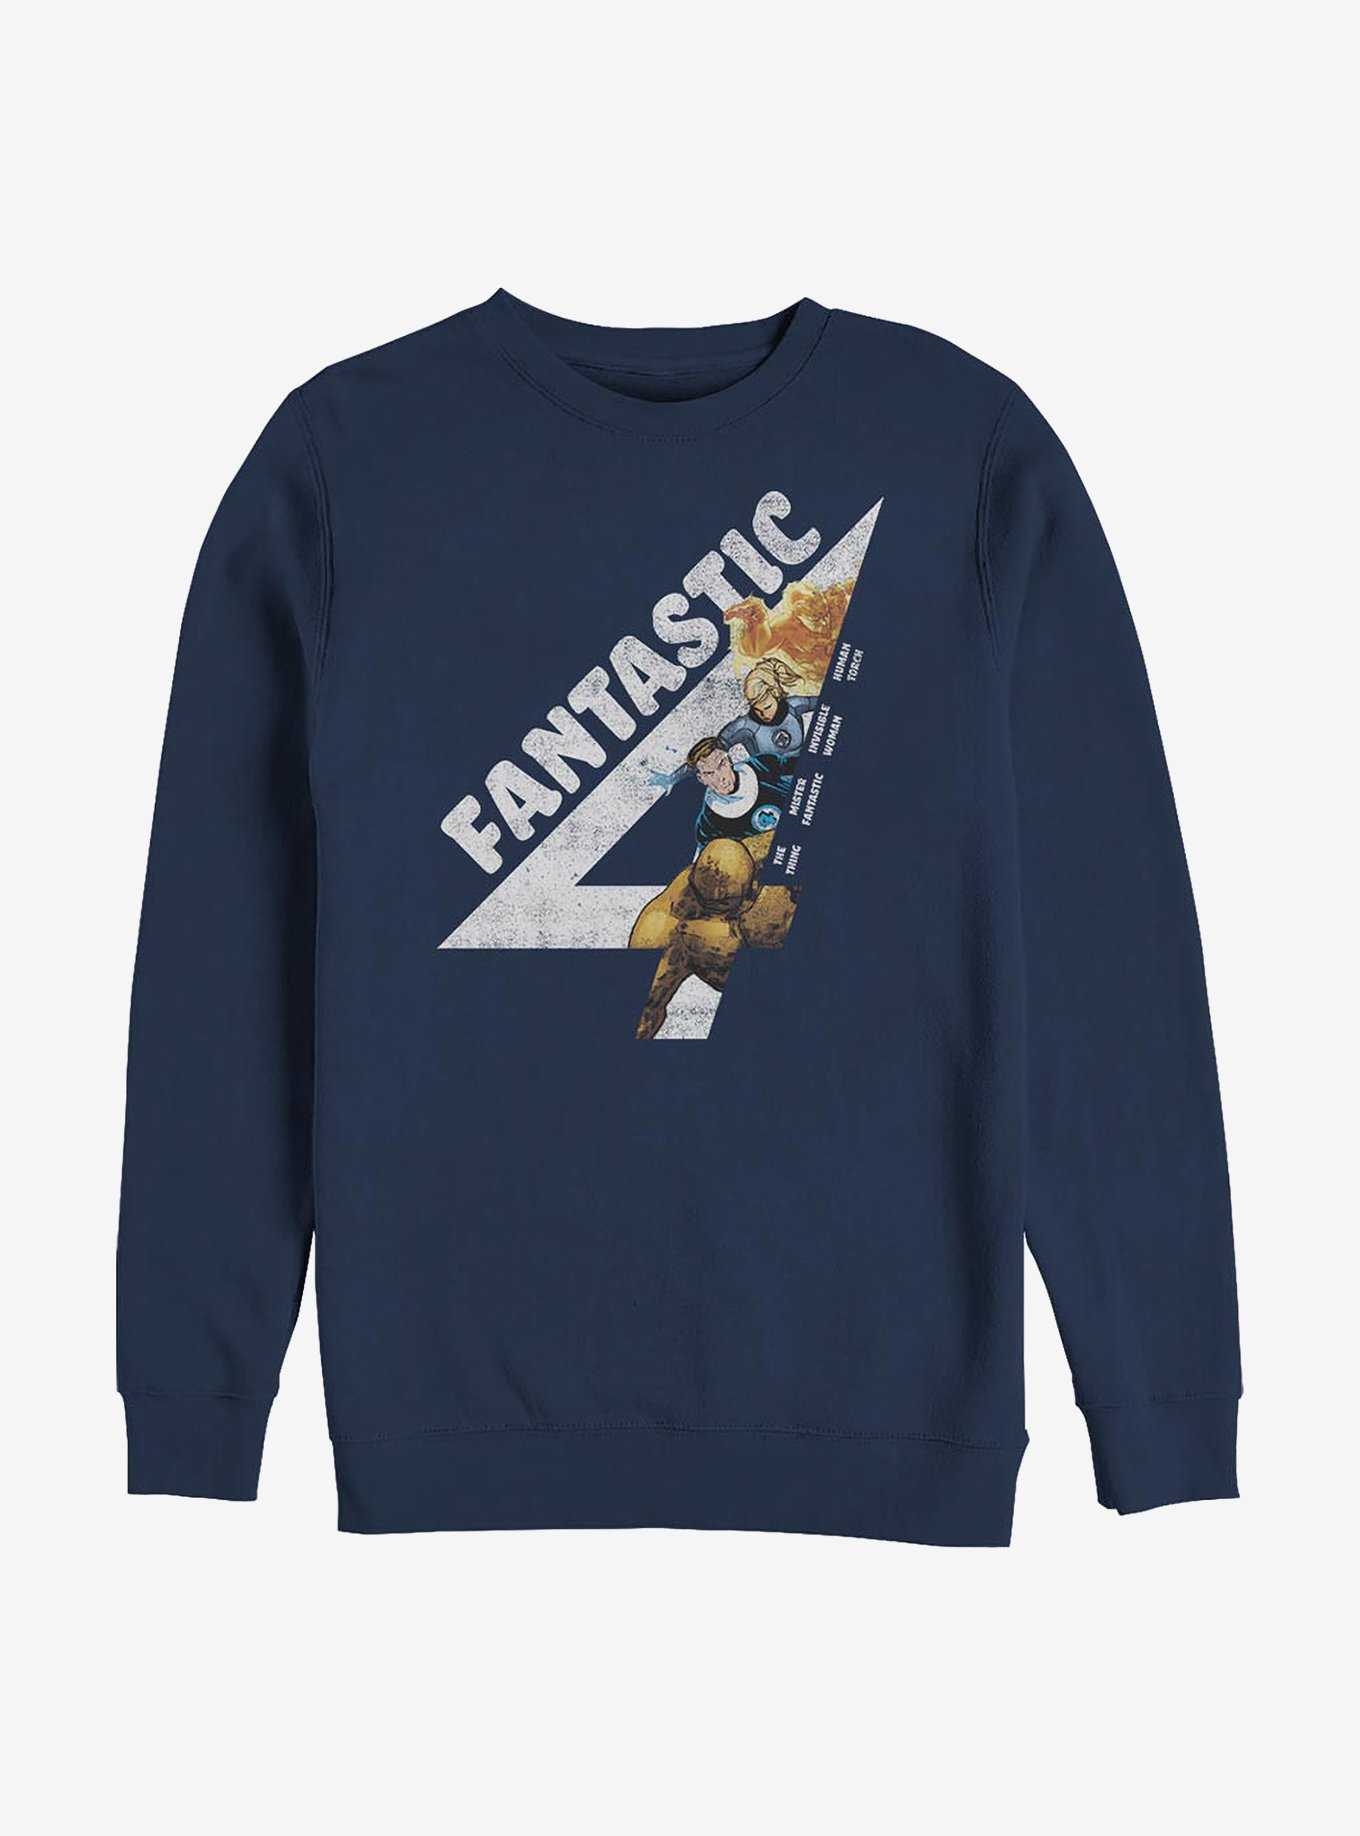 Marvel Fantastic Four Fantastically Vintage Crew Sweatshirt, , hi-res